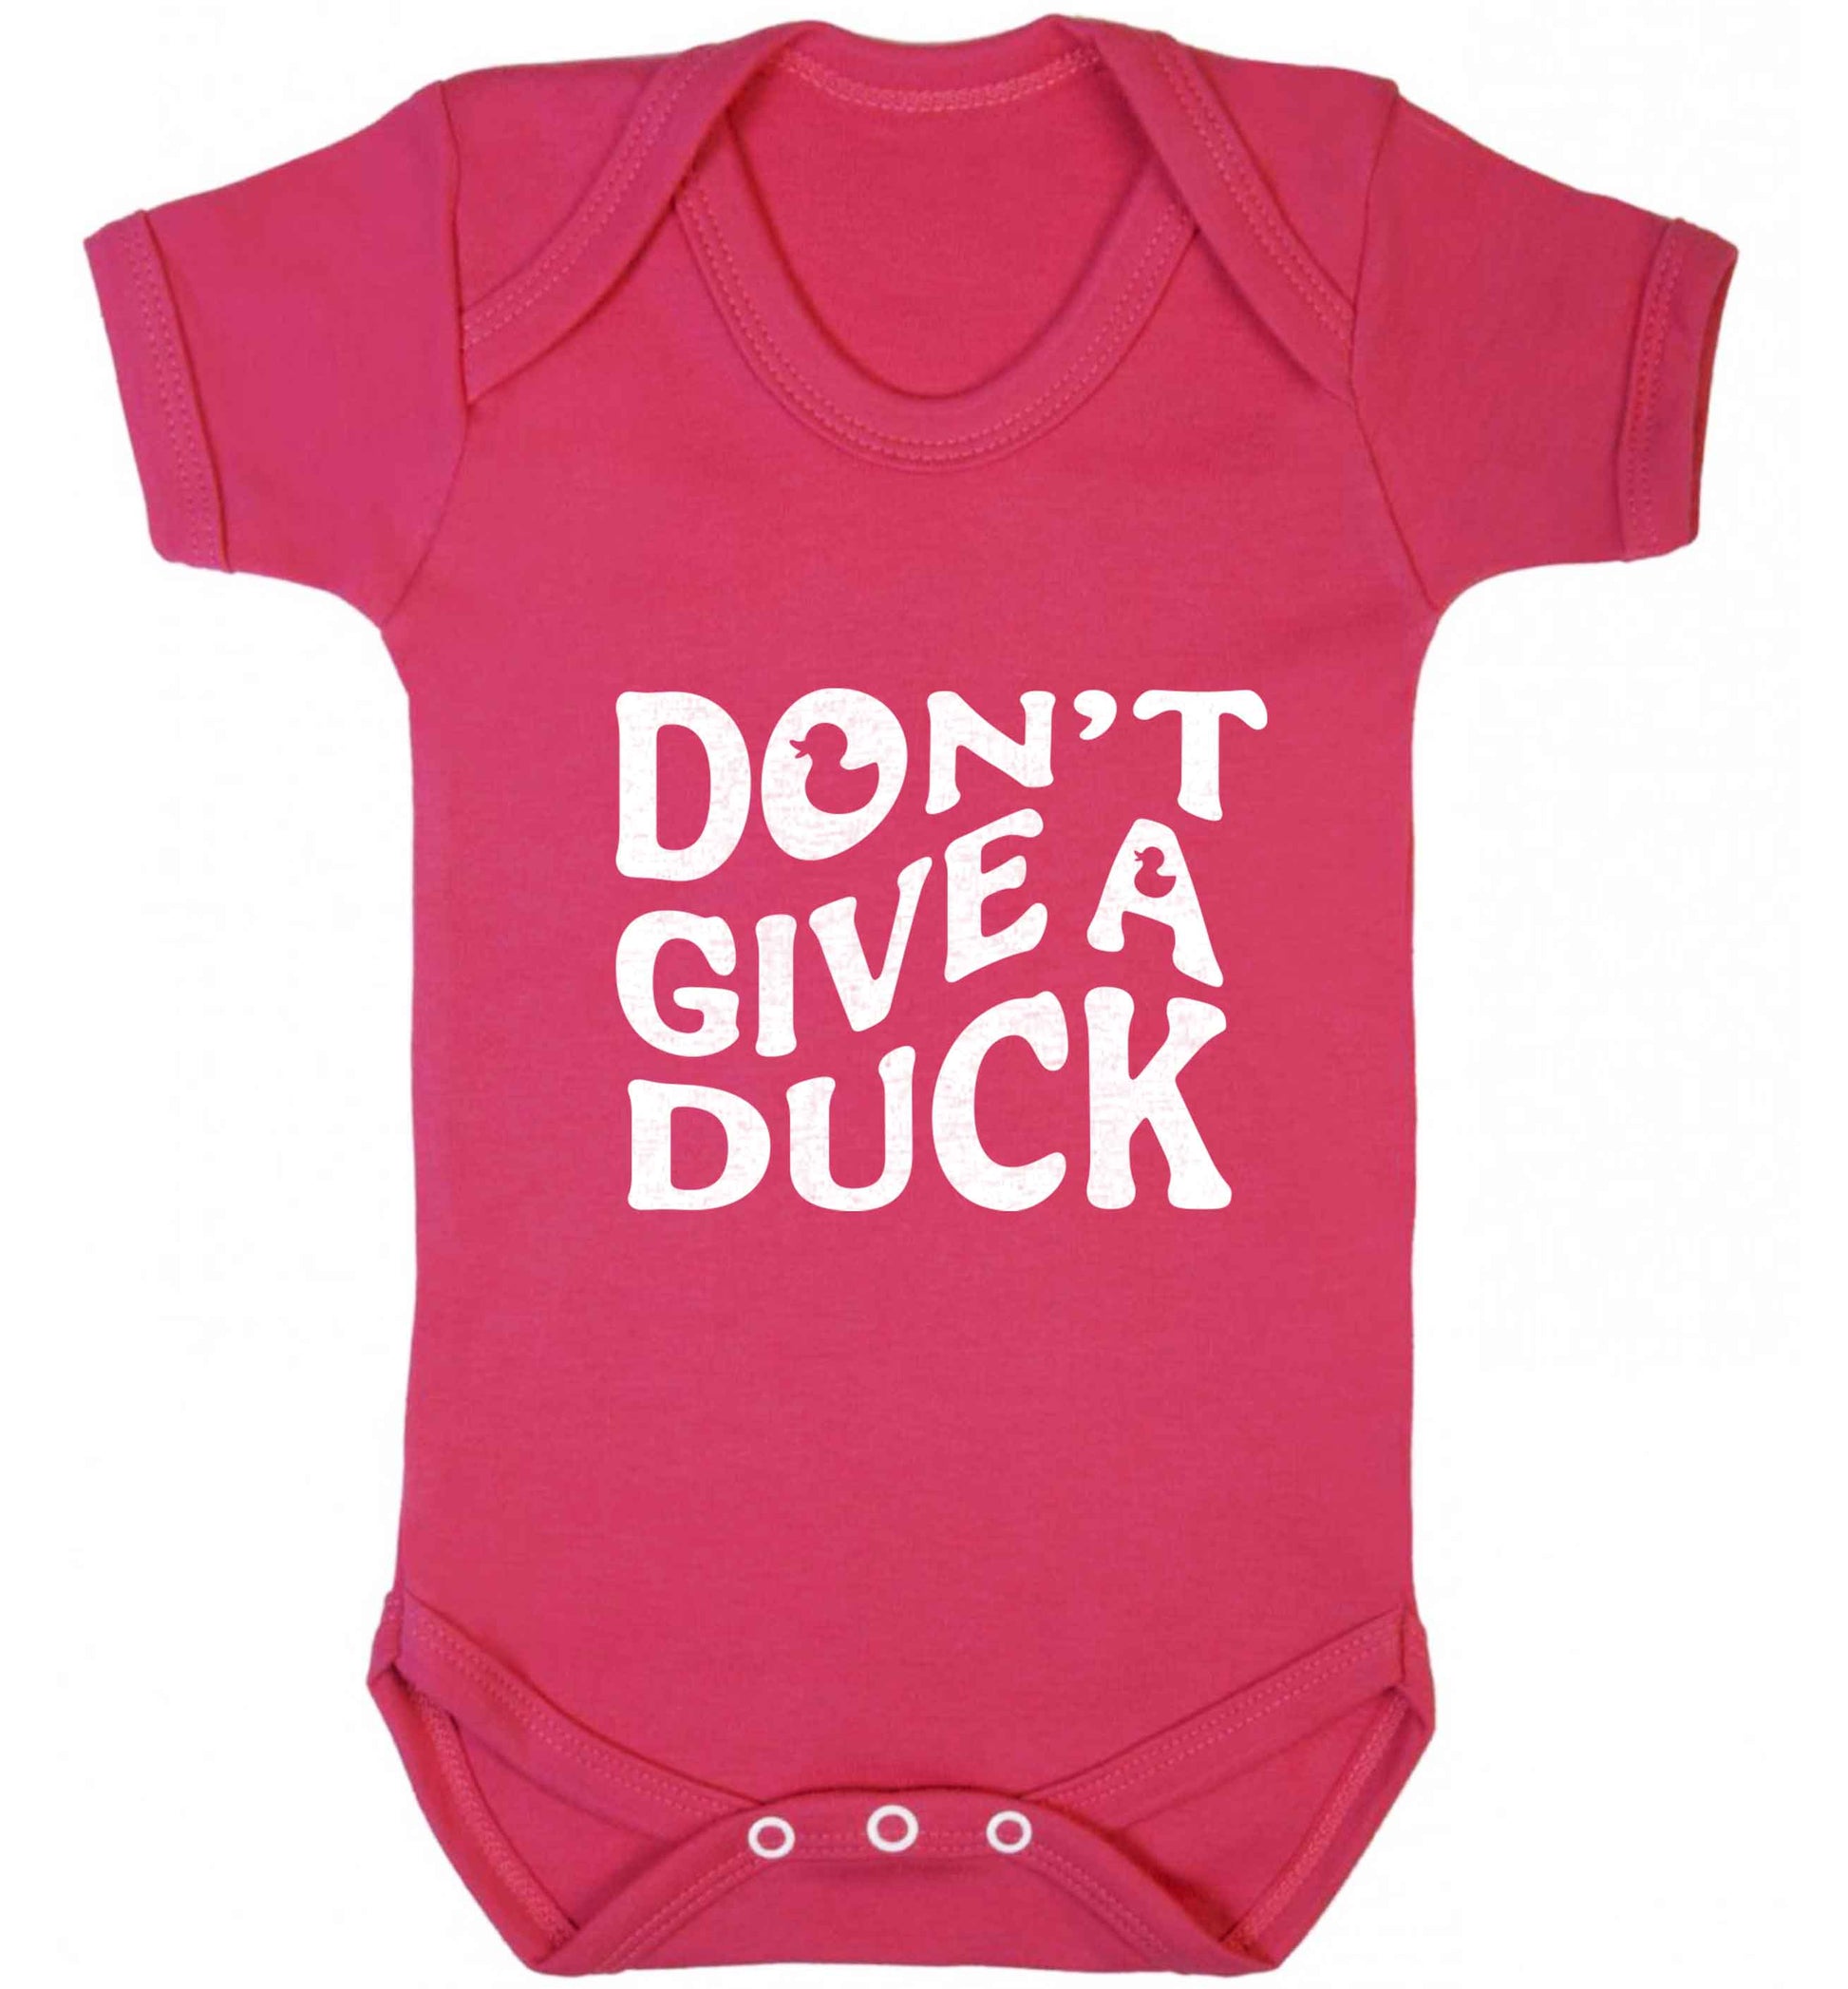 Don't give a duck baby vest dark pink 18-24 months